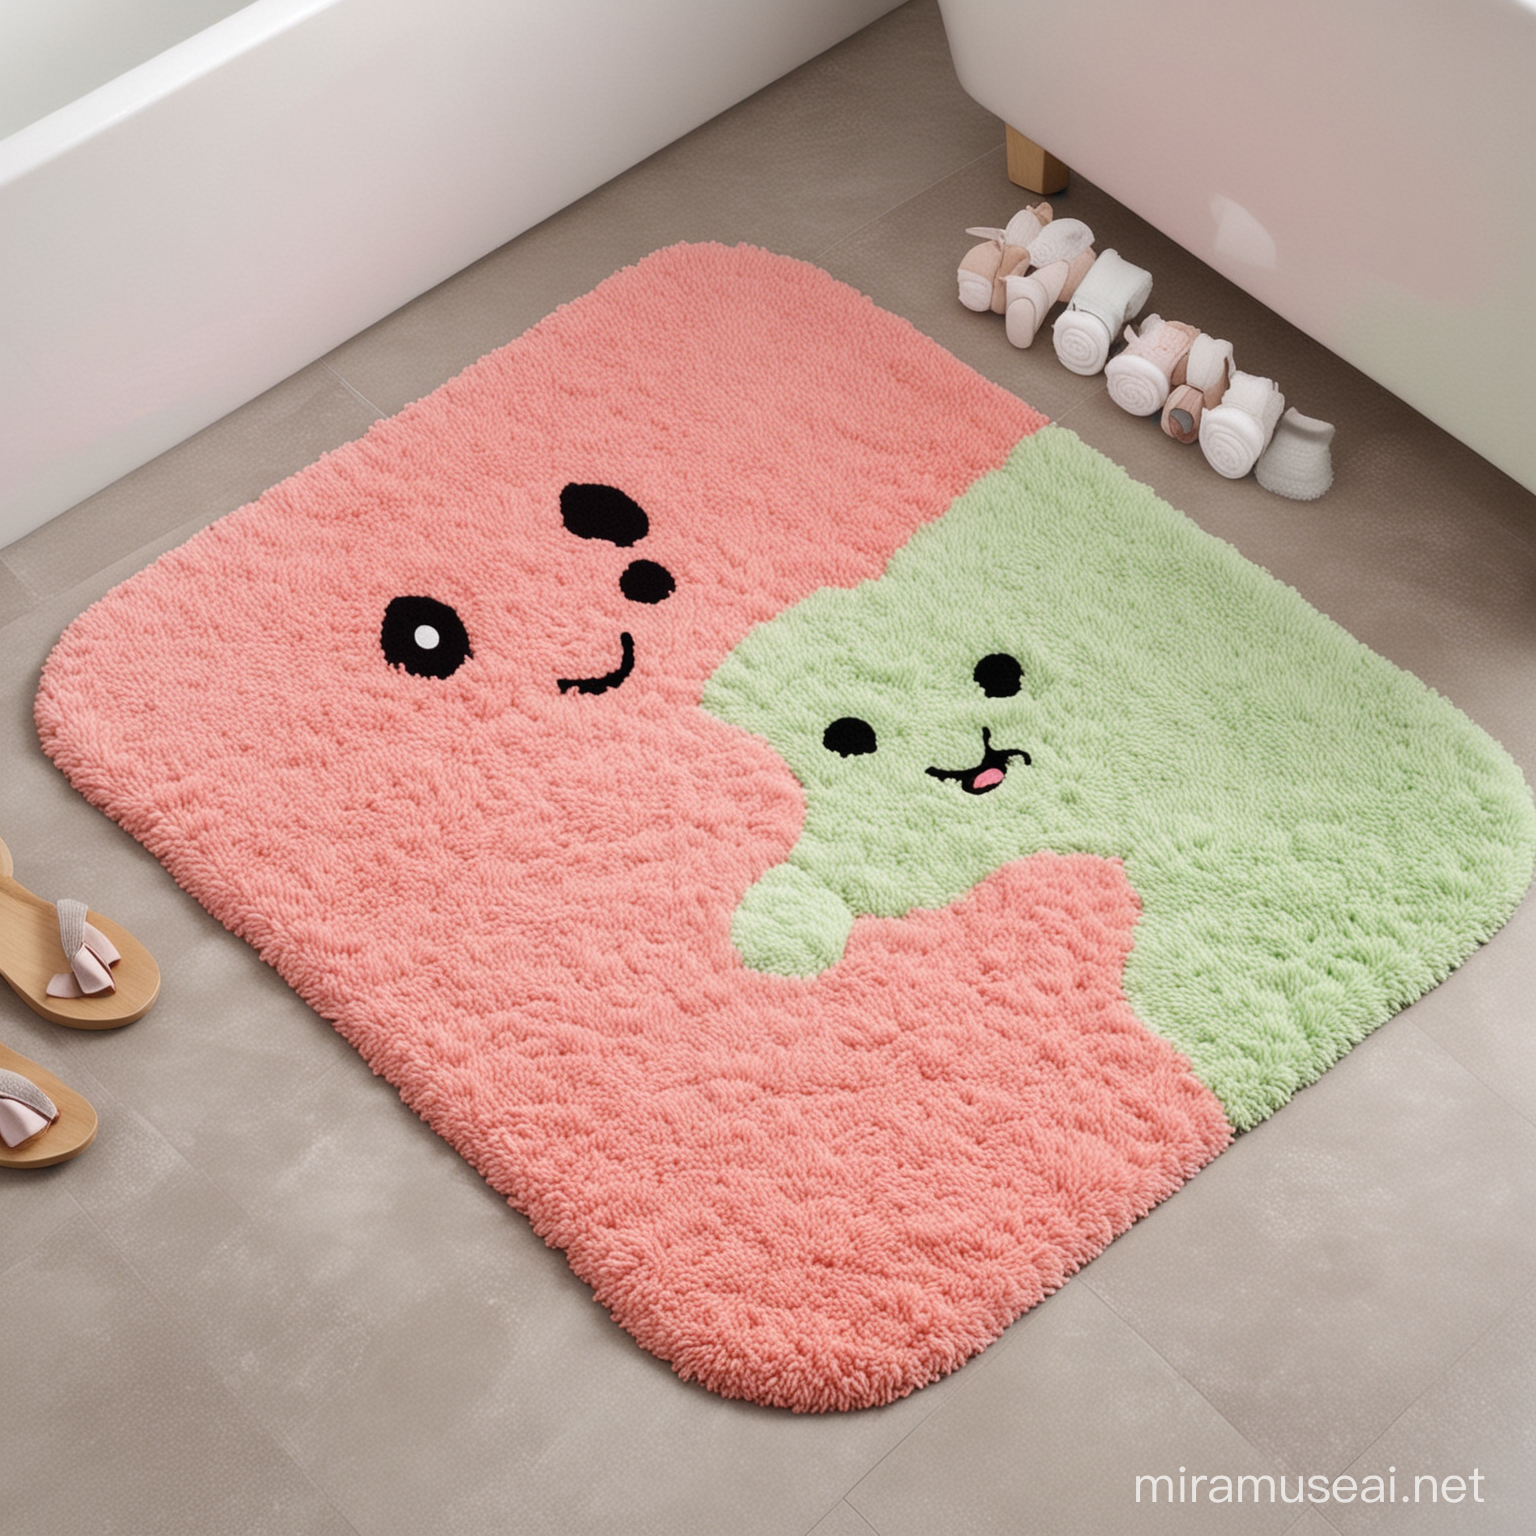 cute and Funny bath mat design
